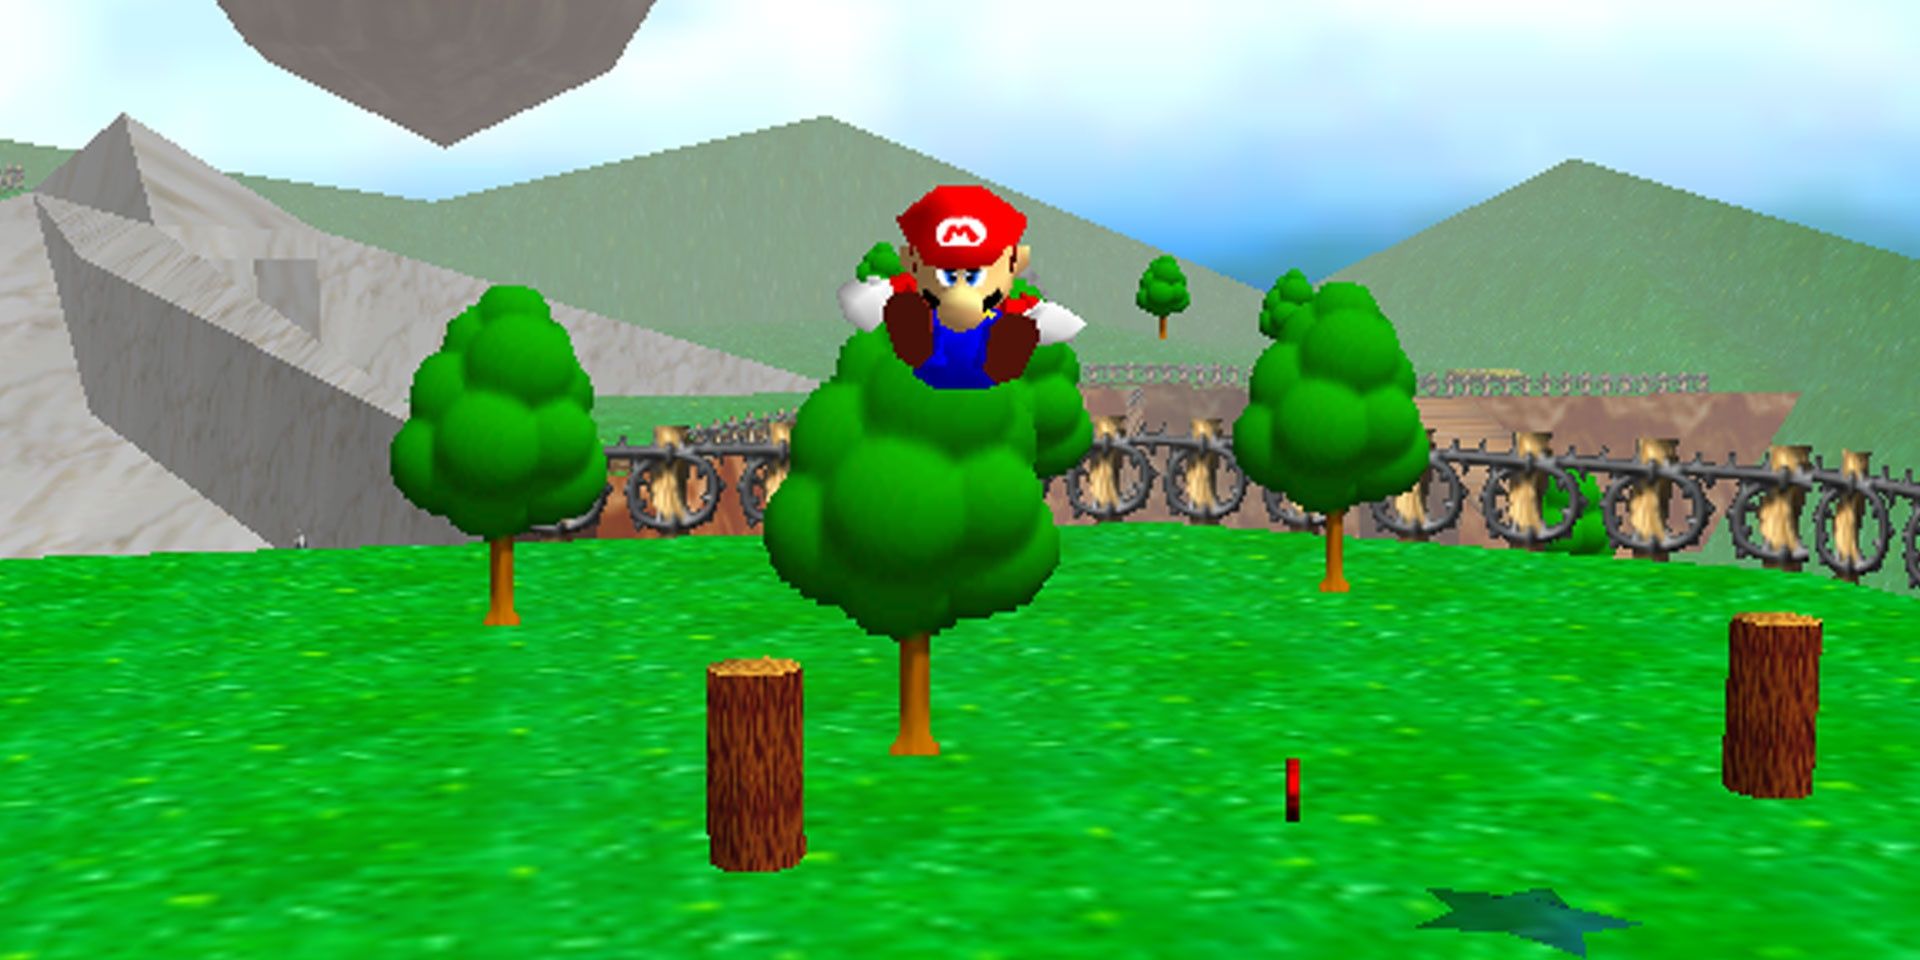 Mario jumping high in Super Mario 64